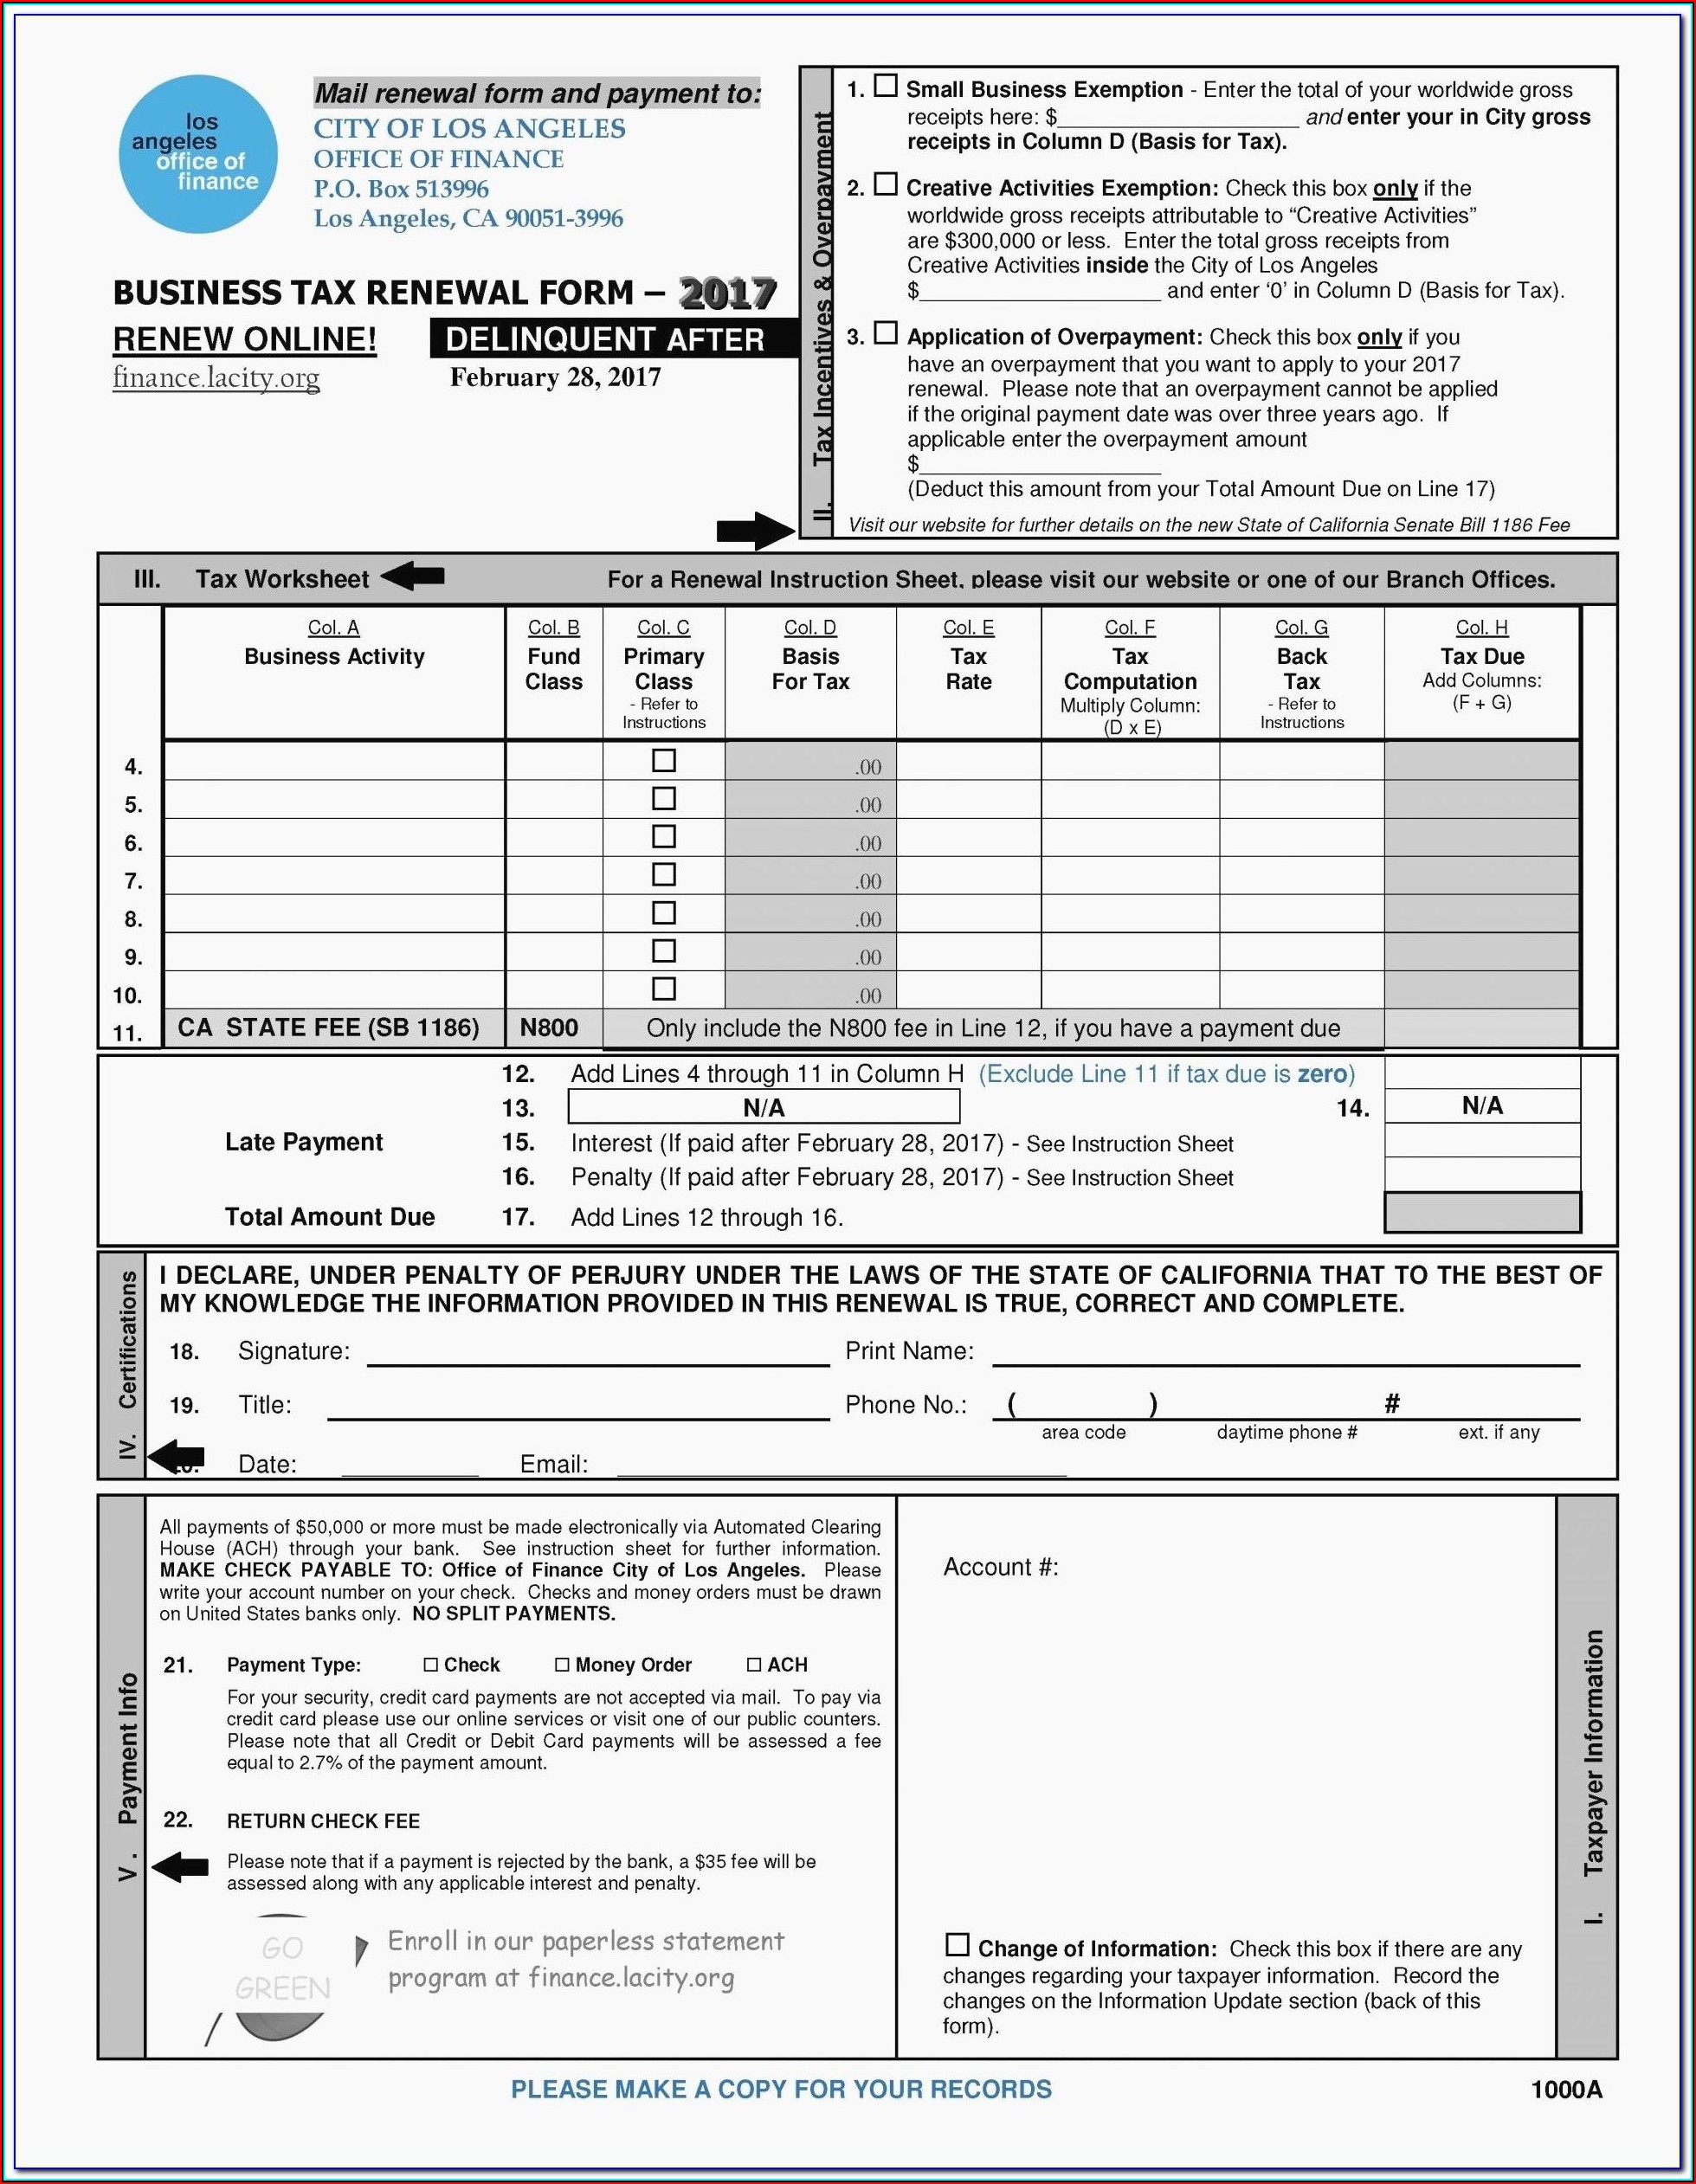 Adams Tax Form Helper Software 2017 Download